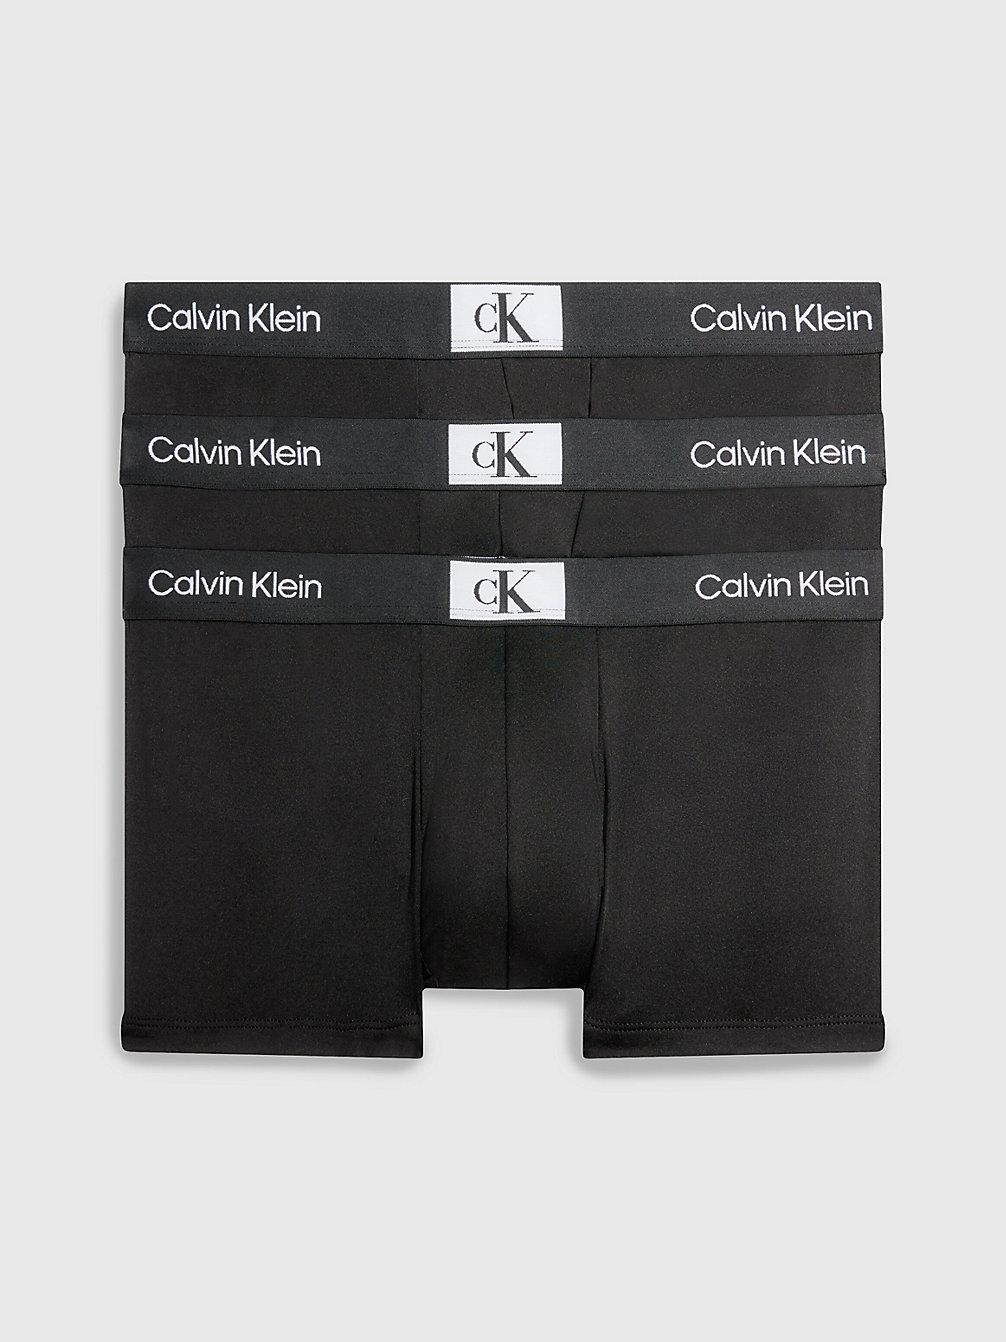 BLACK/BLACK/BLACK > Zestaw 3 Par Bokserek Z Niskim Stanem - Ck96 > undefined Mężczyźni - Calvin Klein